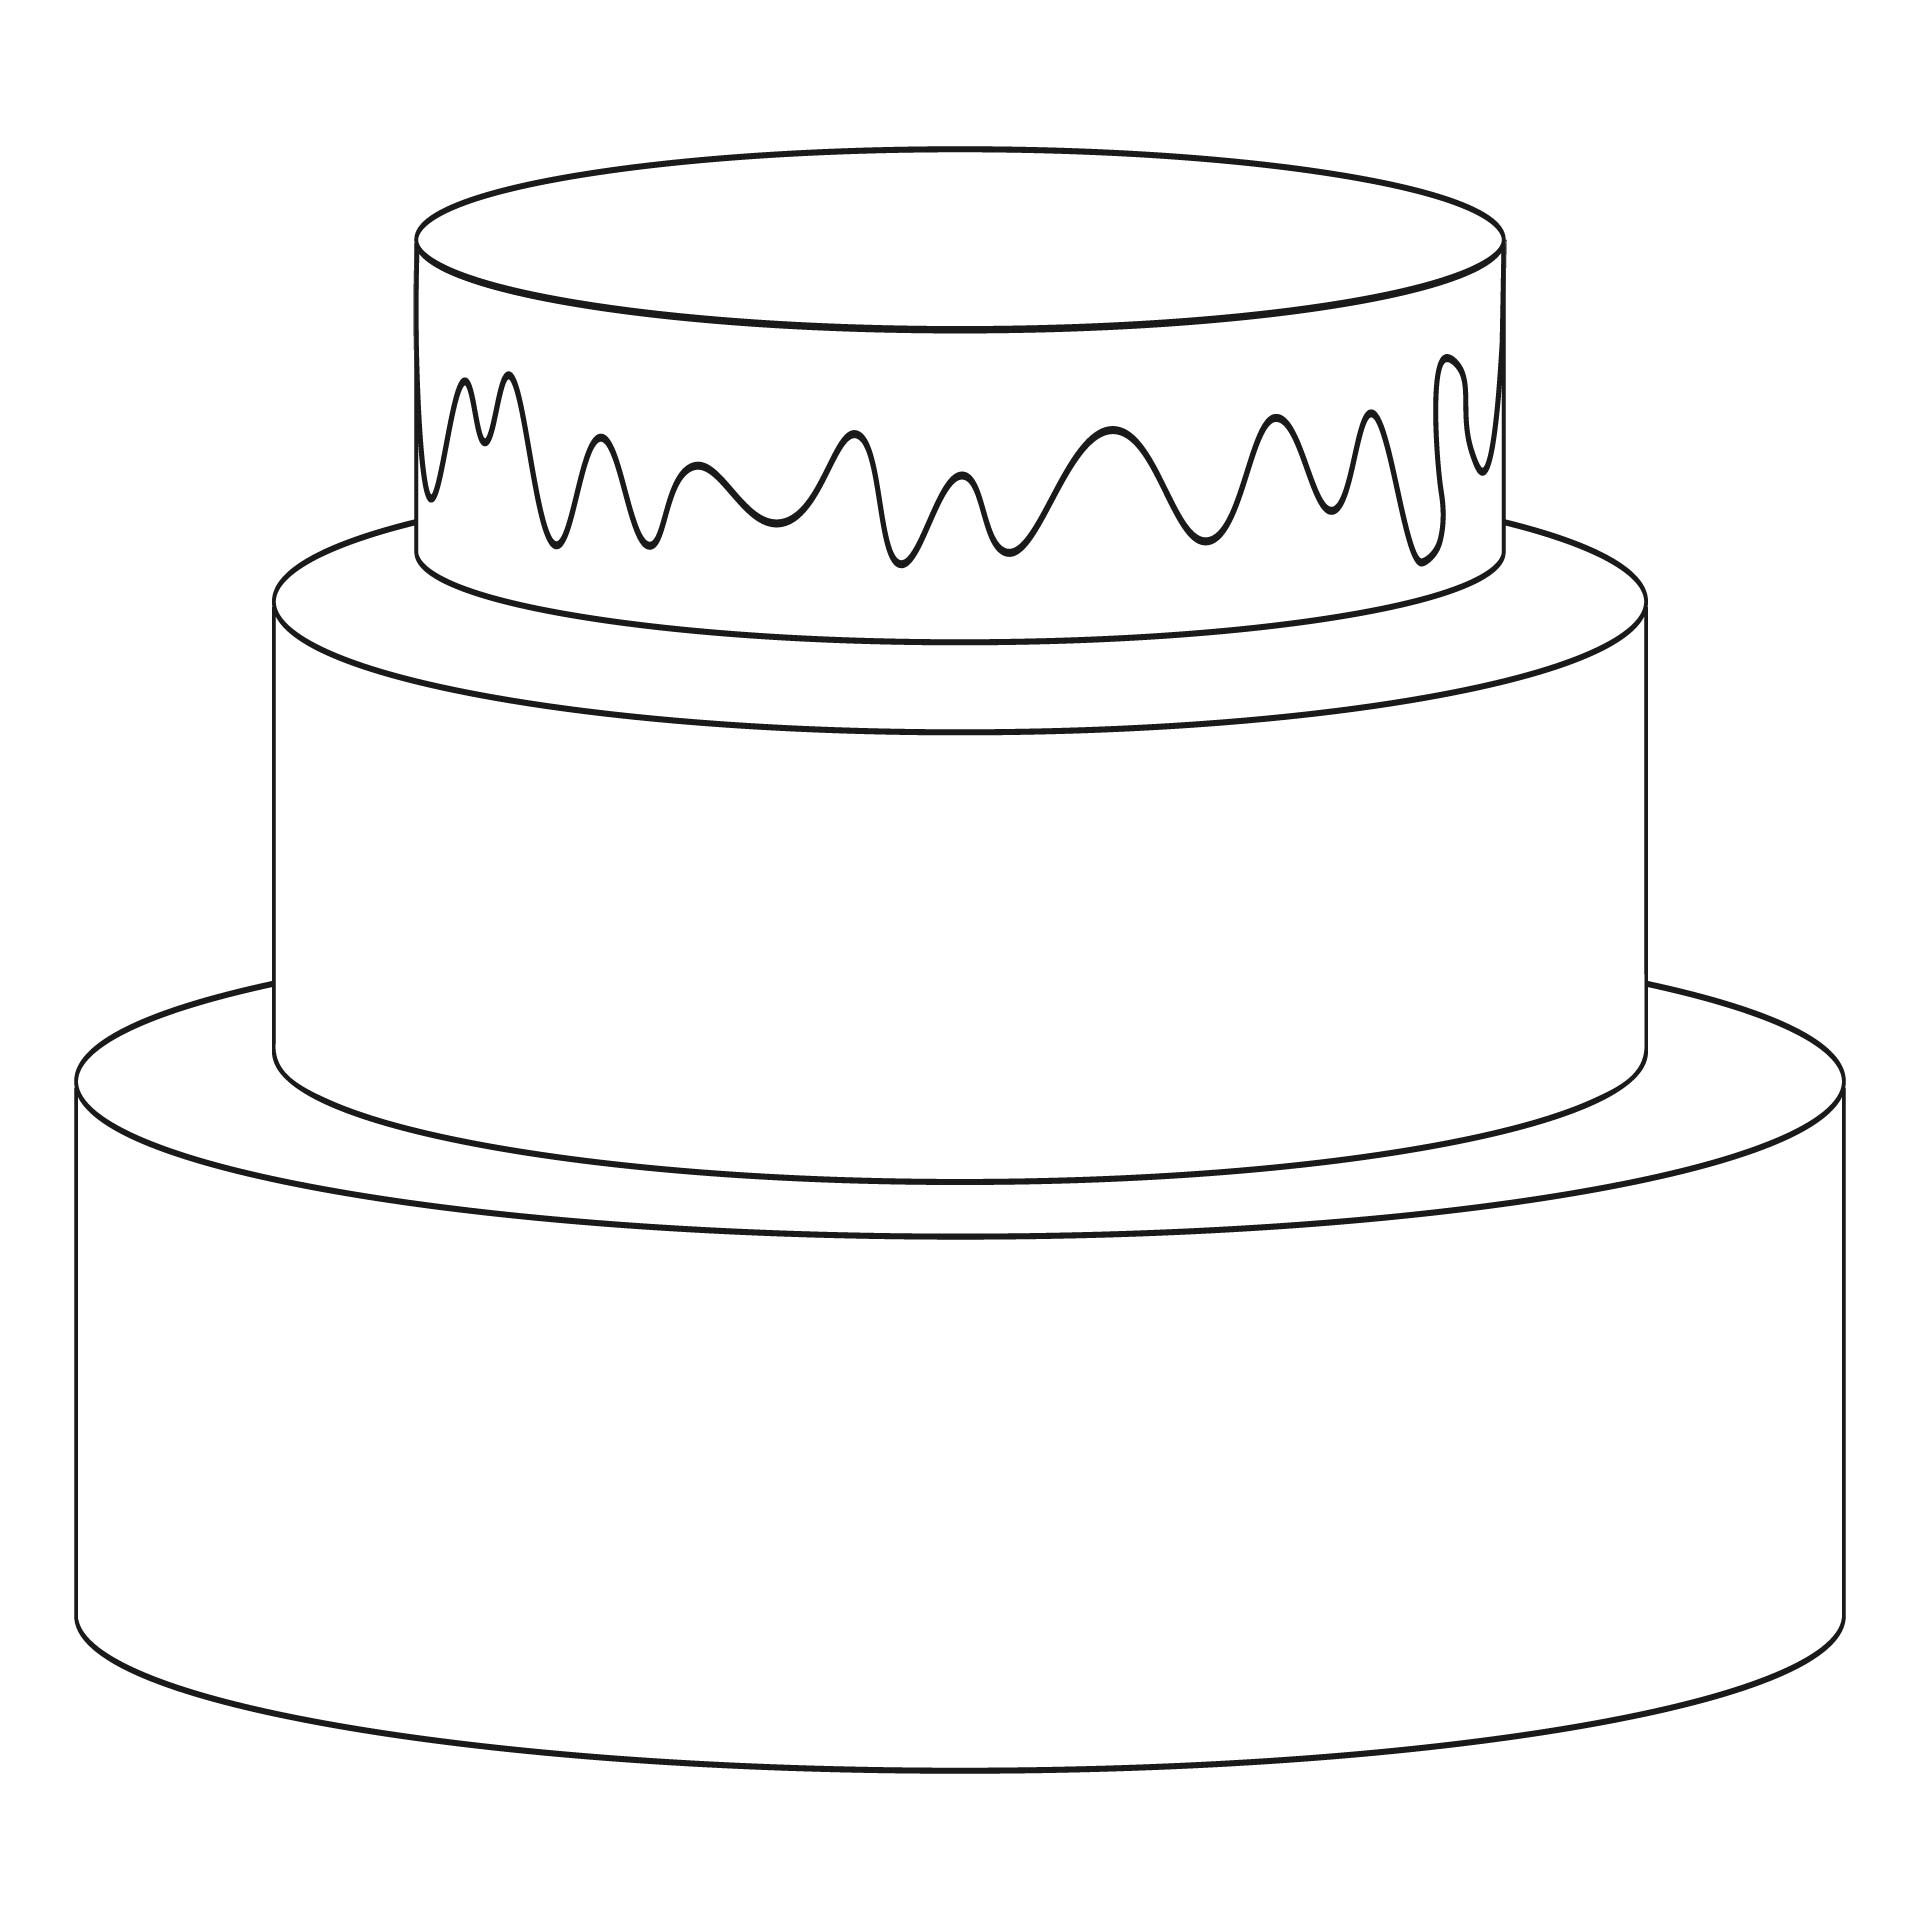 Blank Cake Design Templates